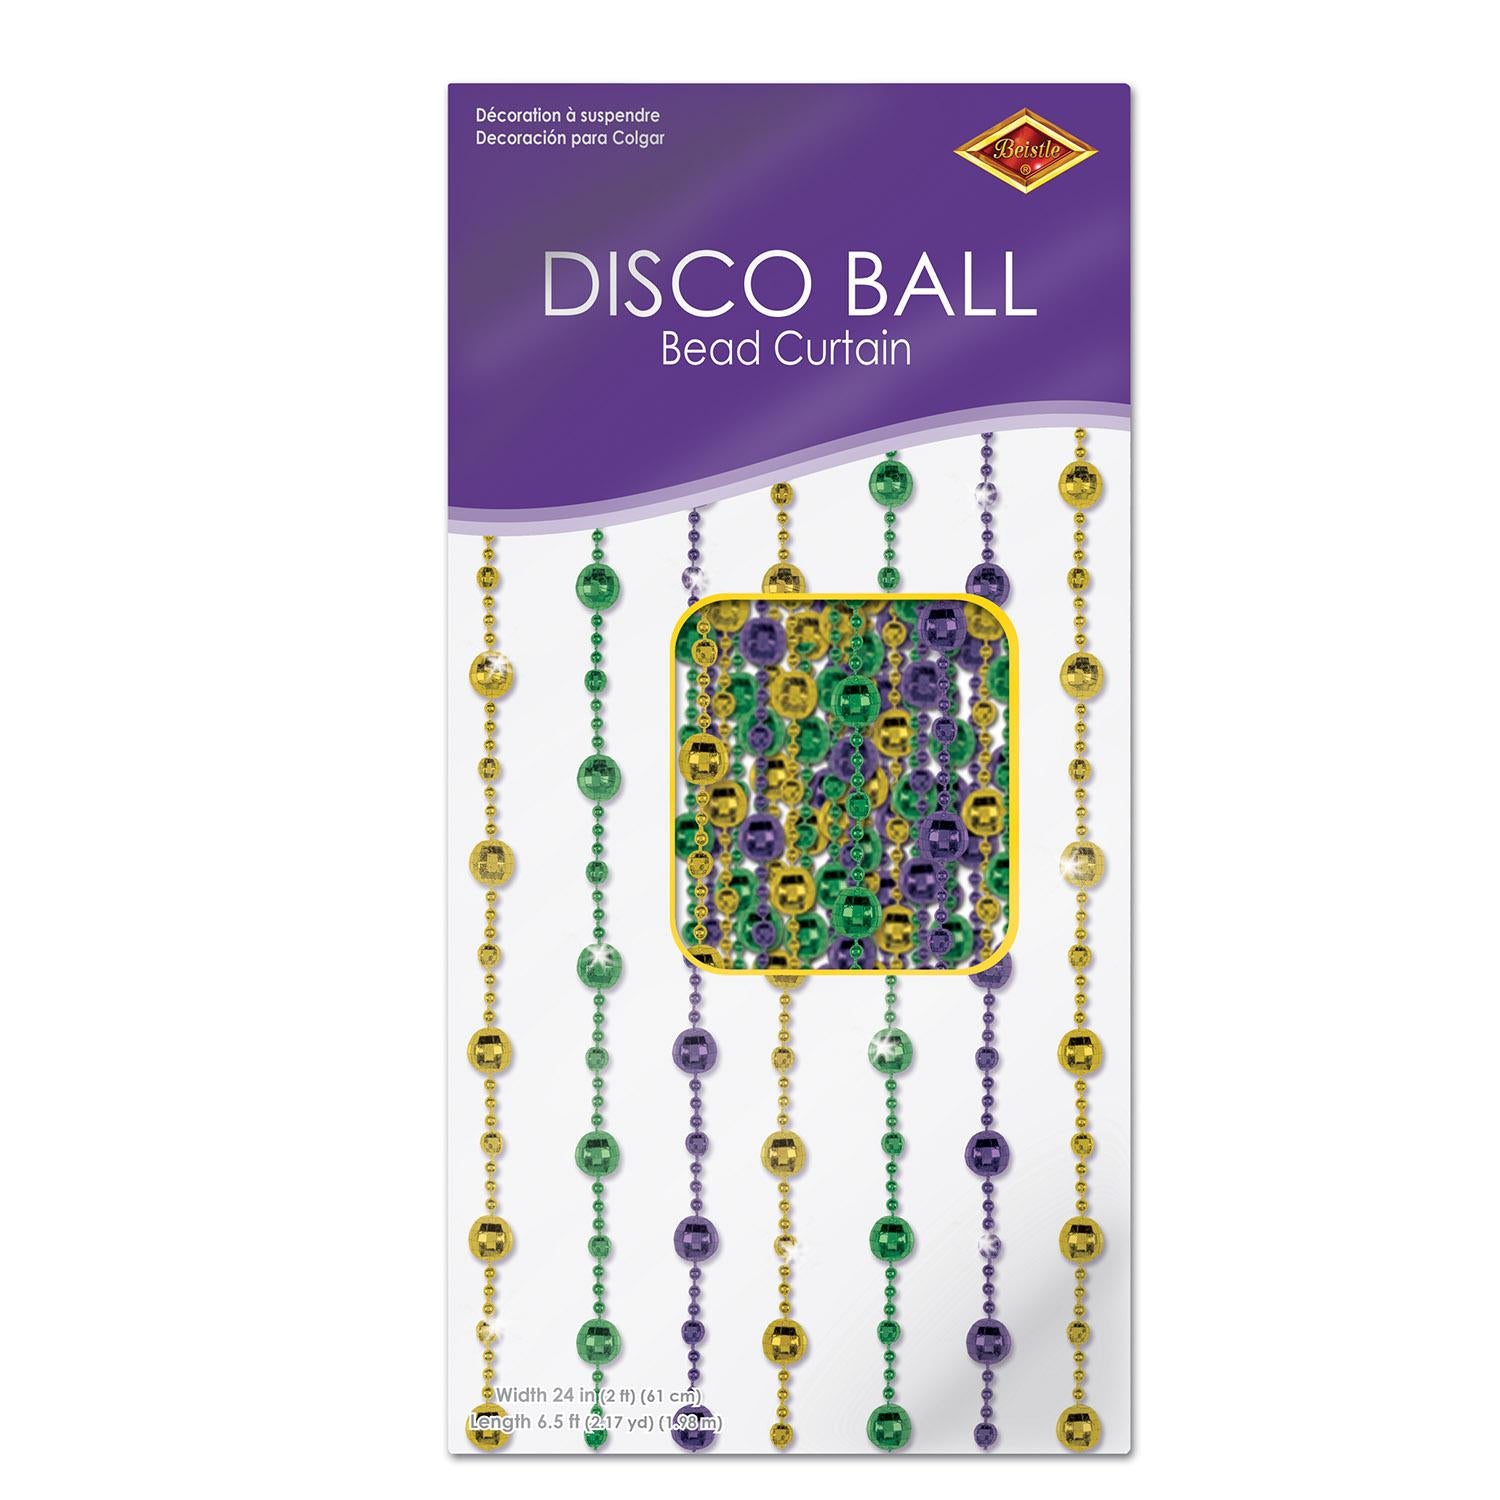 Beistle Mardi Gras Disco Ball Bead Curtain